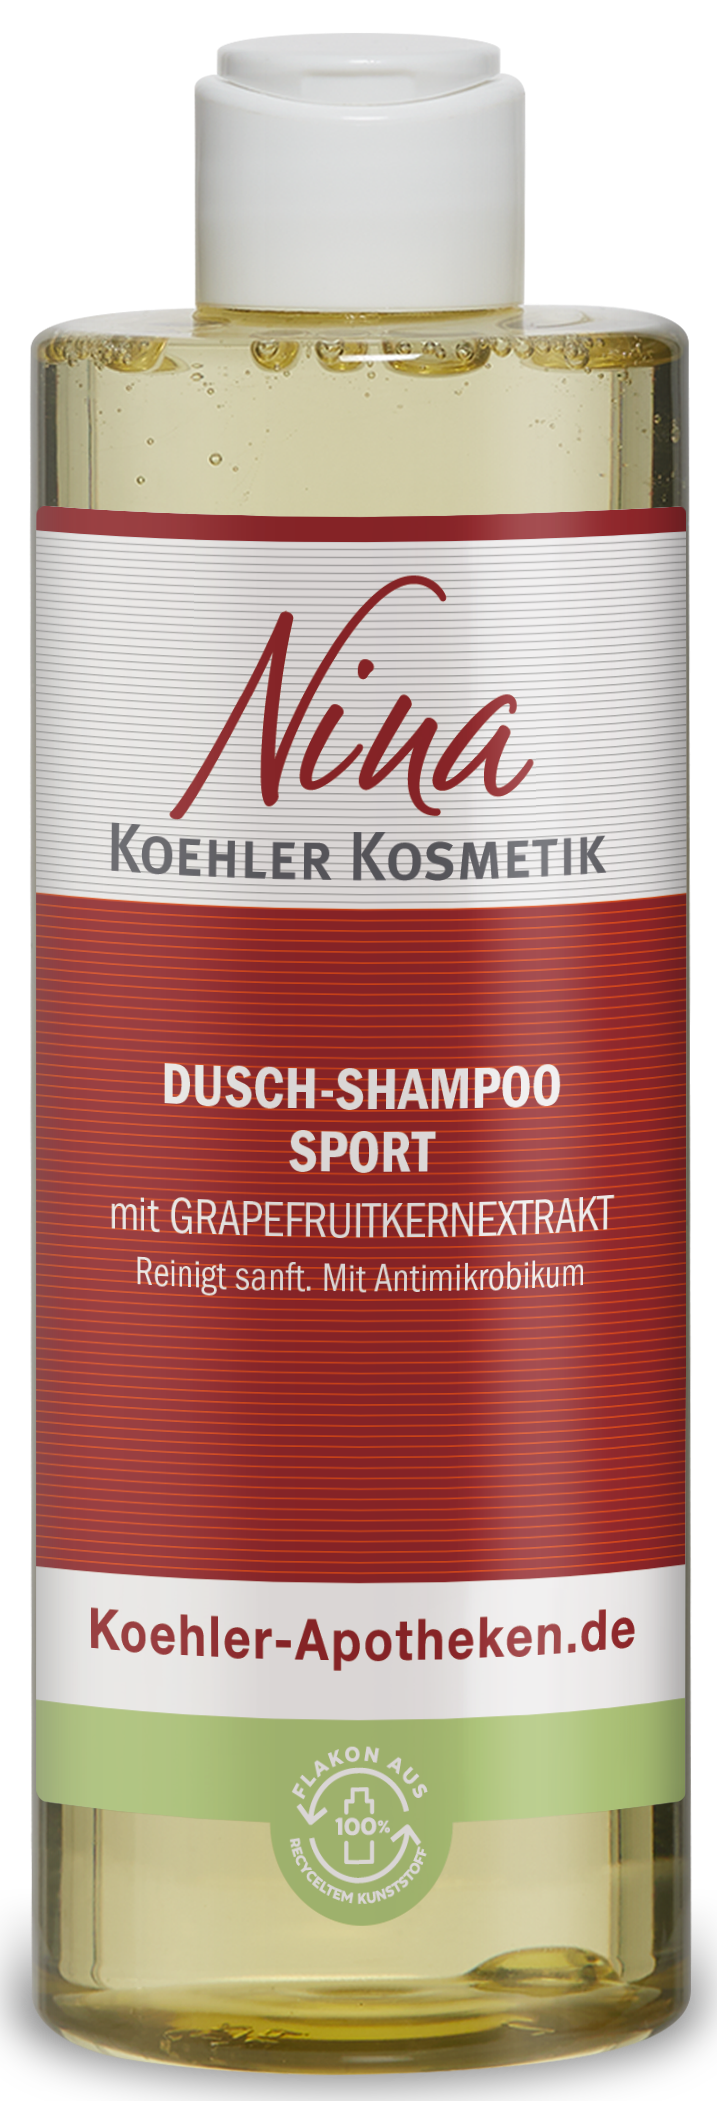 Nina Koehler Kosmetik Dusch-Shampoo Sport 300 ml